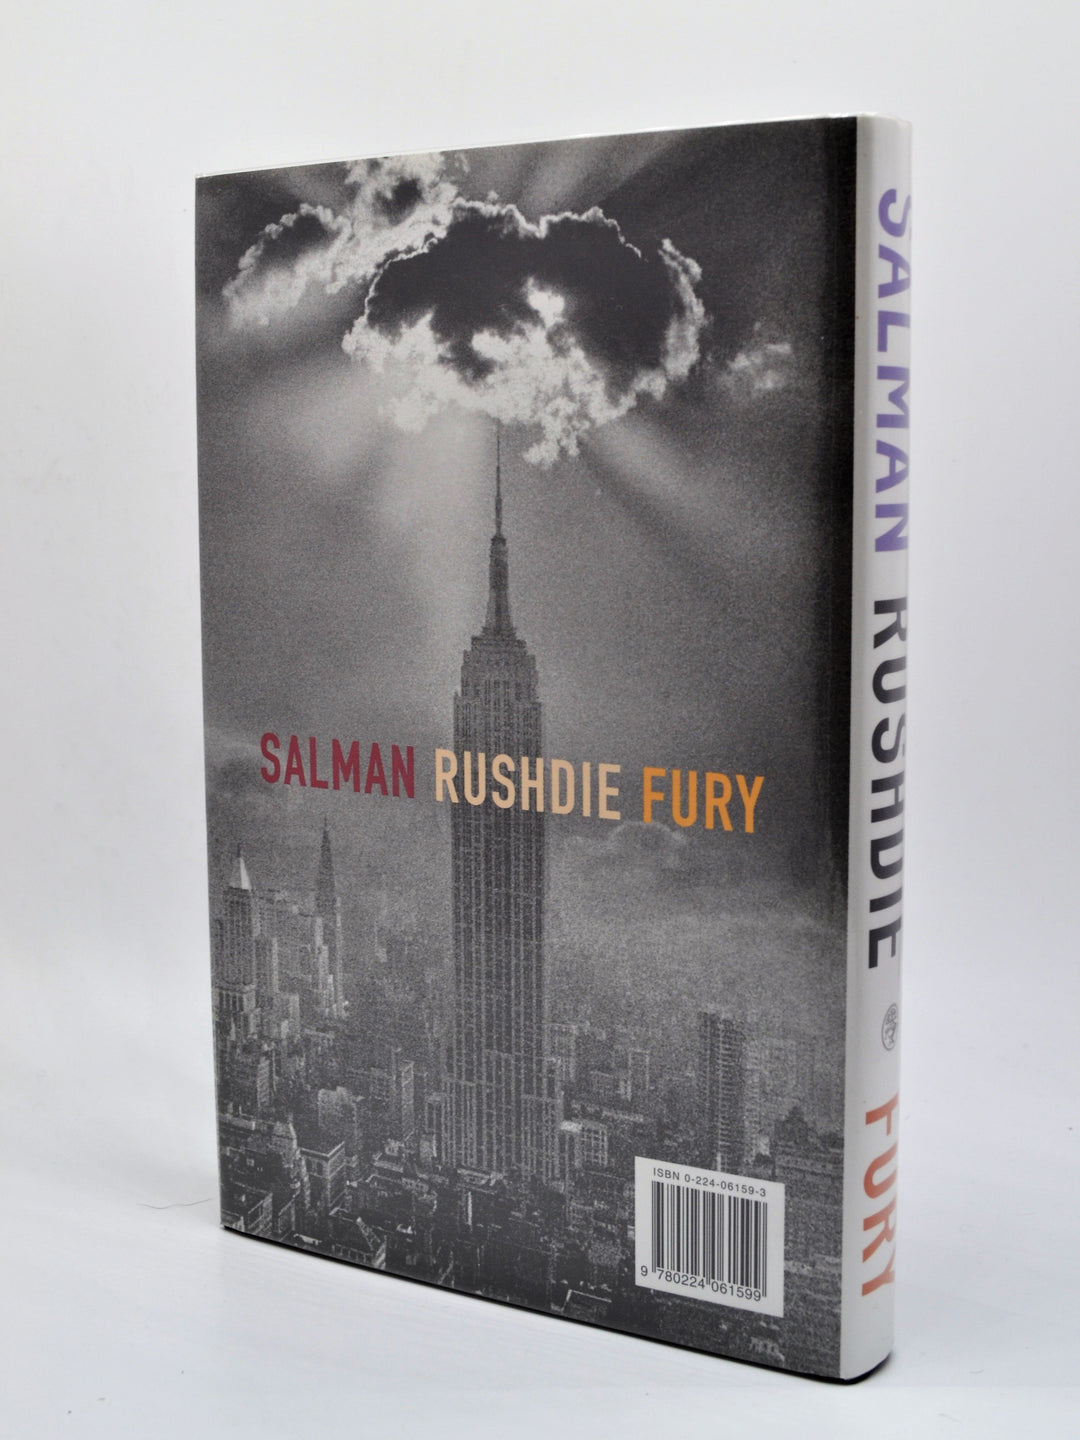 Rushdie, Salman - Fury - SIGNED | image4